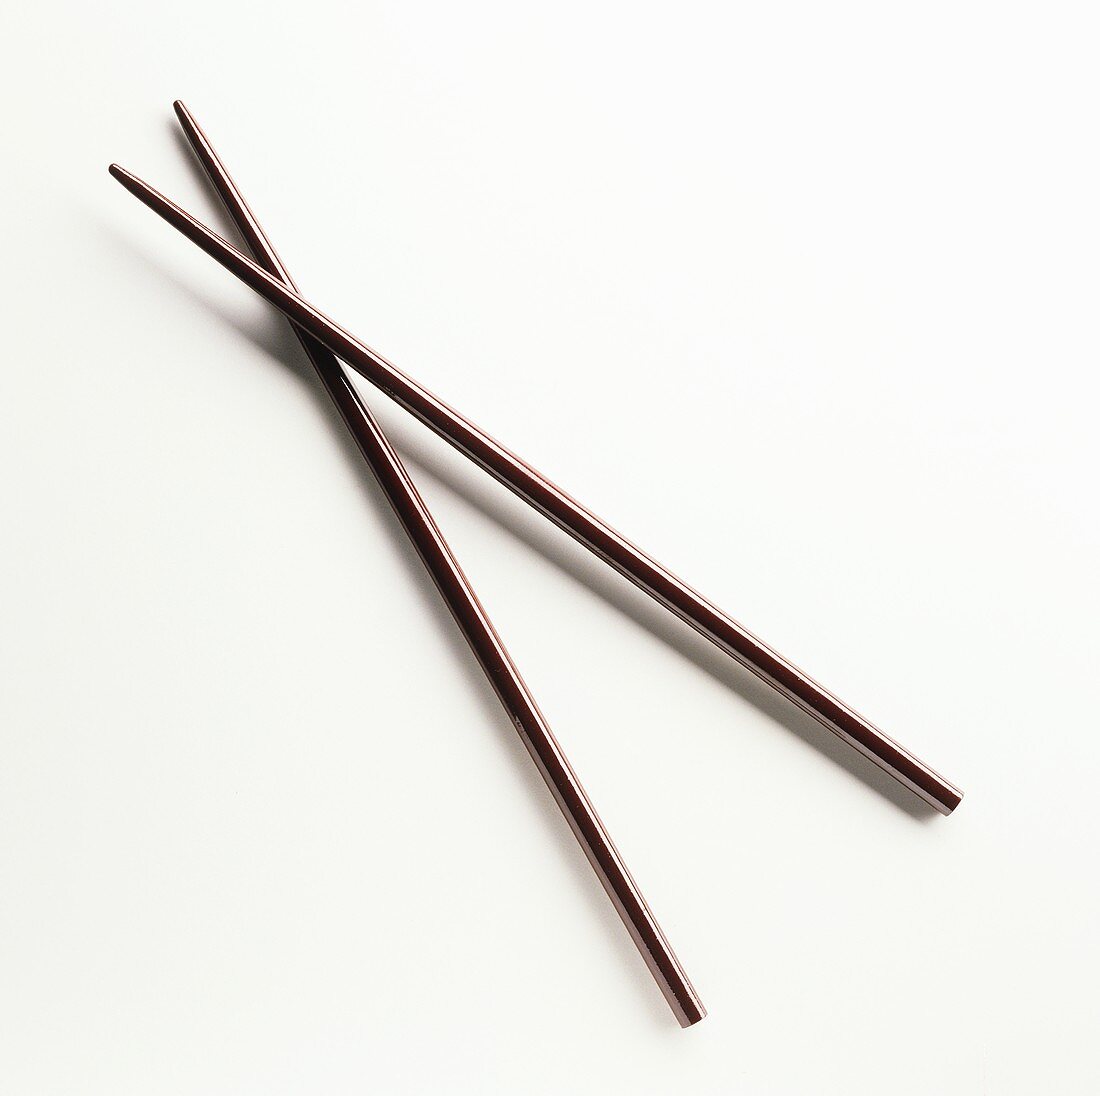 Two brown chopsticks